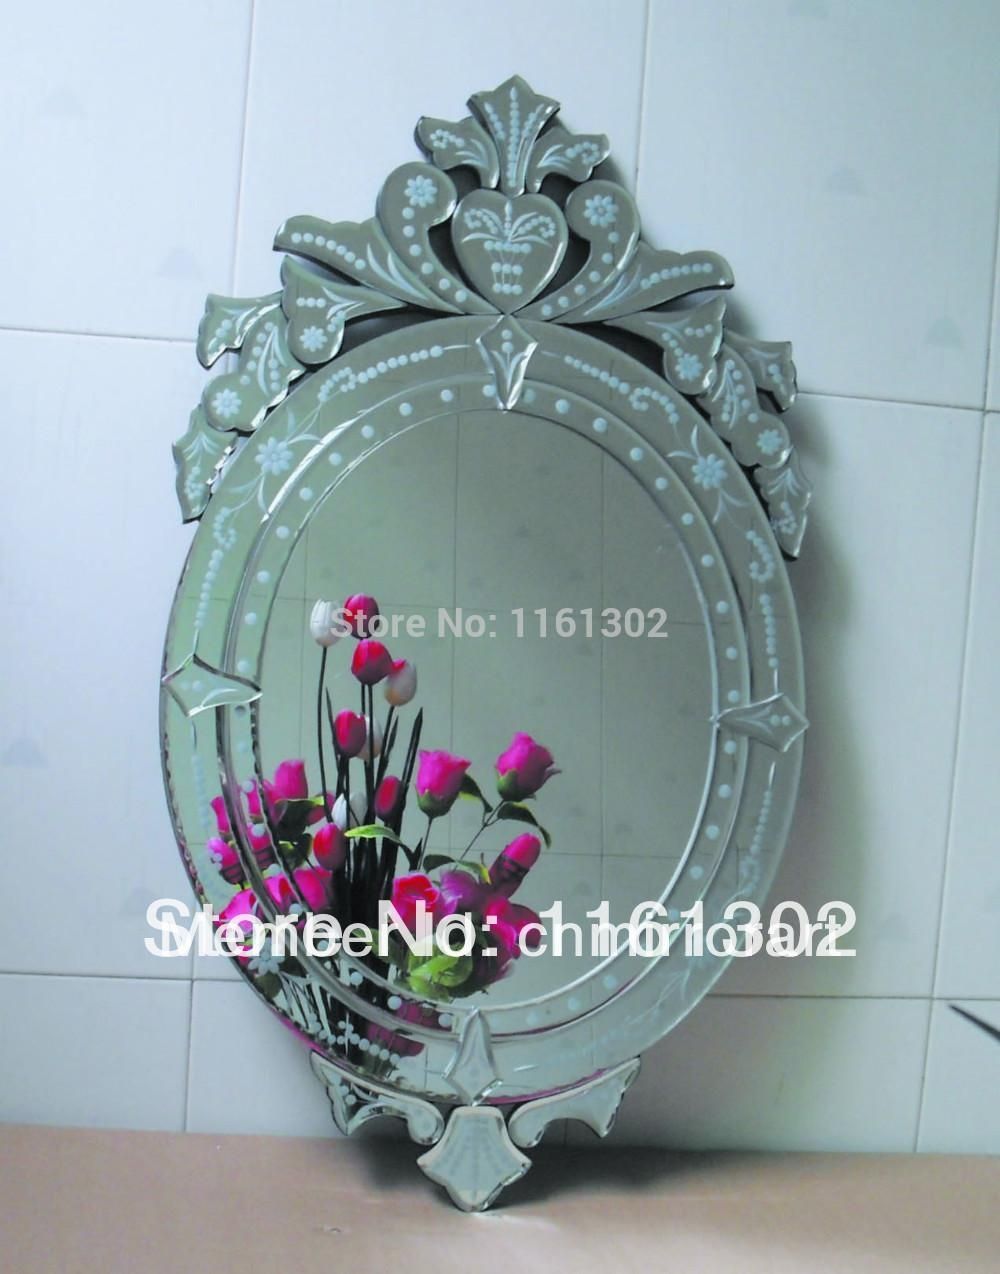 Online Buy Wholesale Venetian Mirrors From China Venetian Mirrors With Cheap Venetian Mirrors (View 2 of 20)